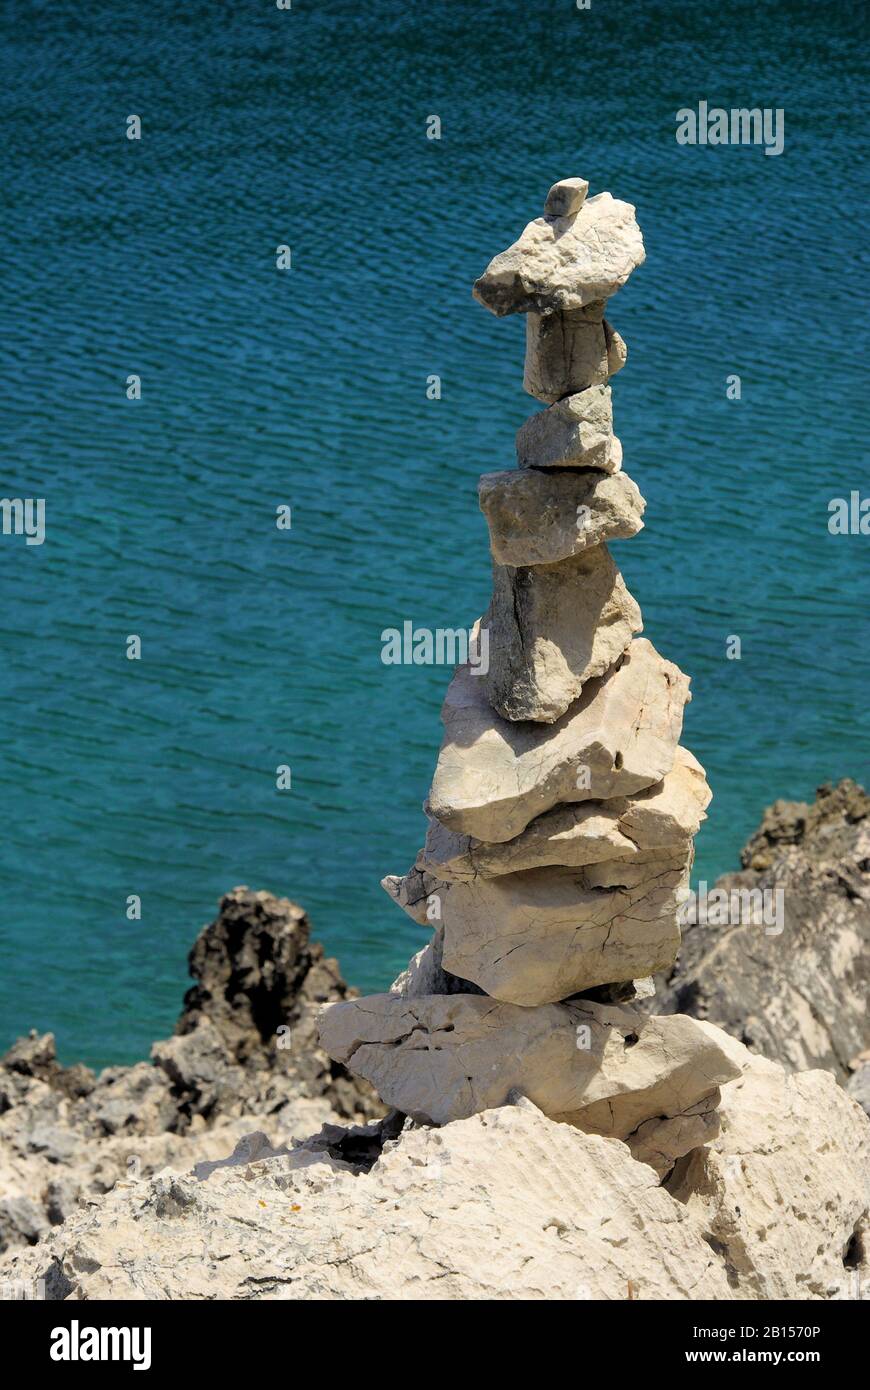 Kieselturm - tower from pebbles 24 Stock Photo